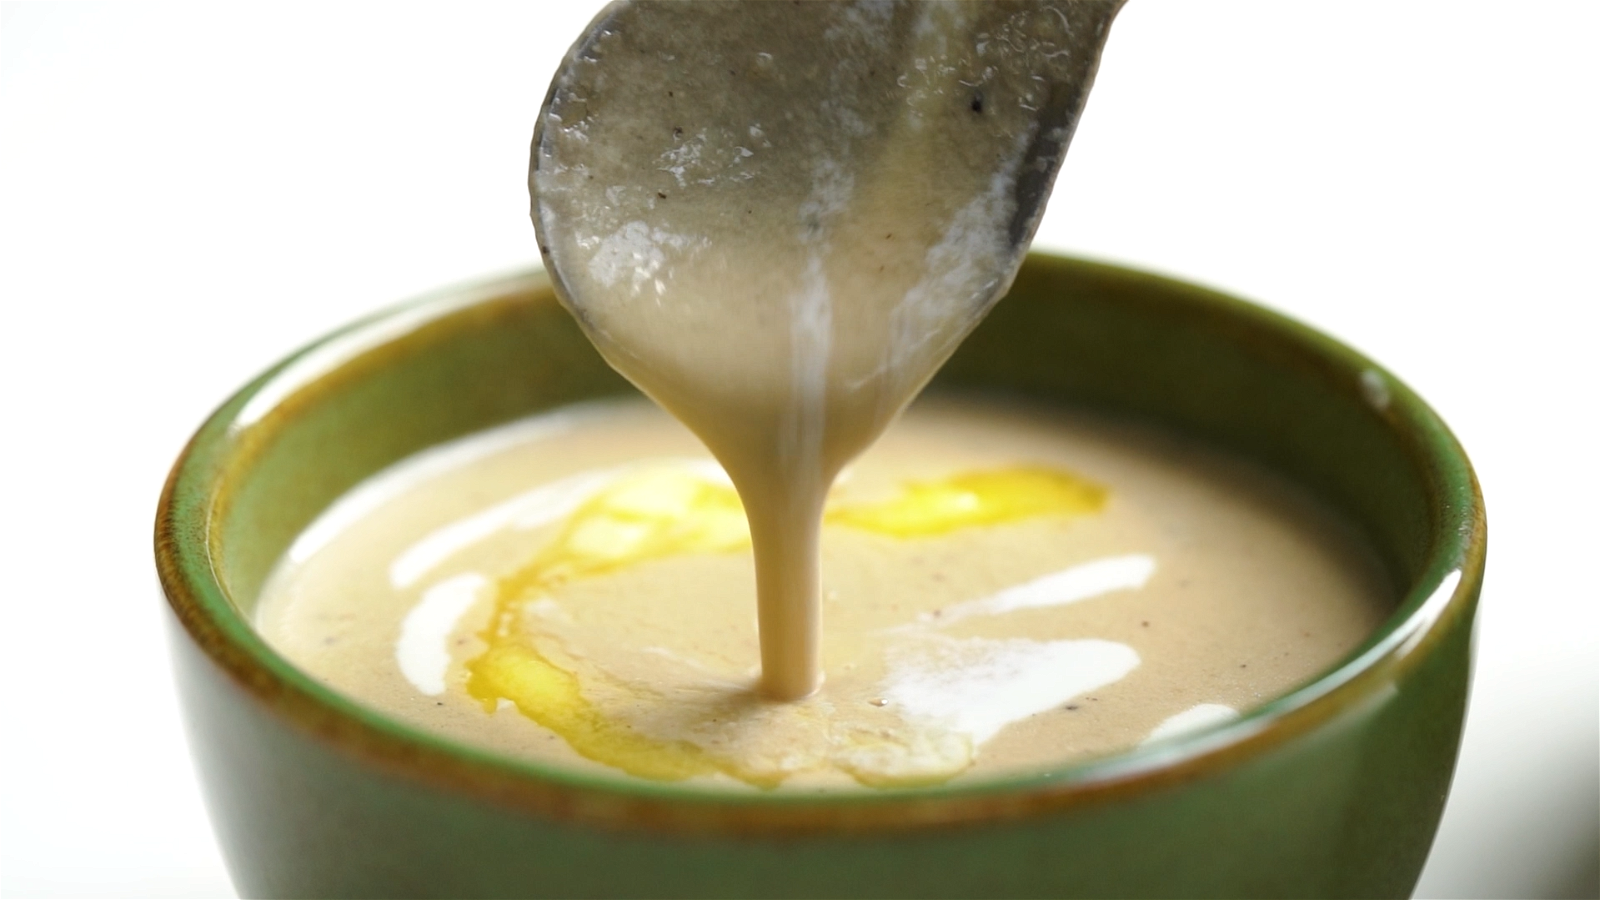 Image of Cream of Mushroom Soup